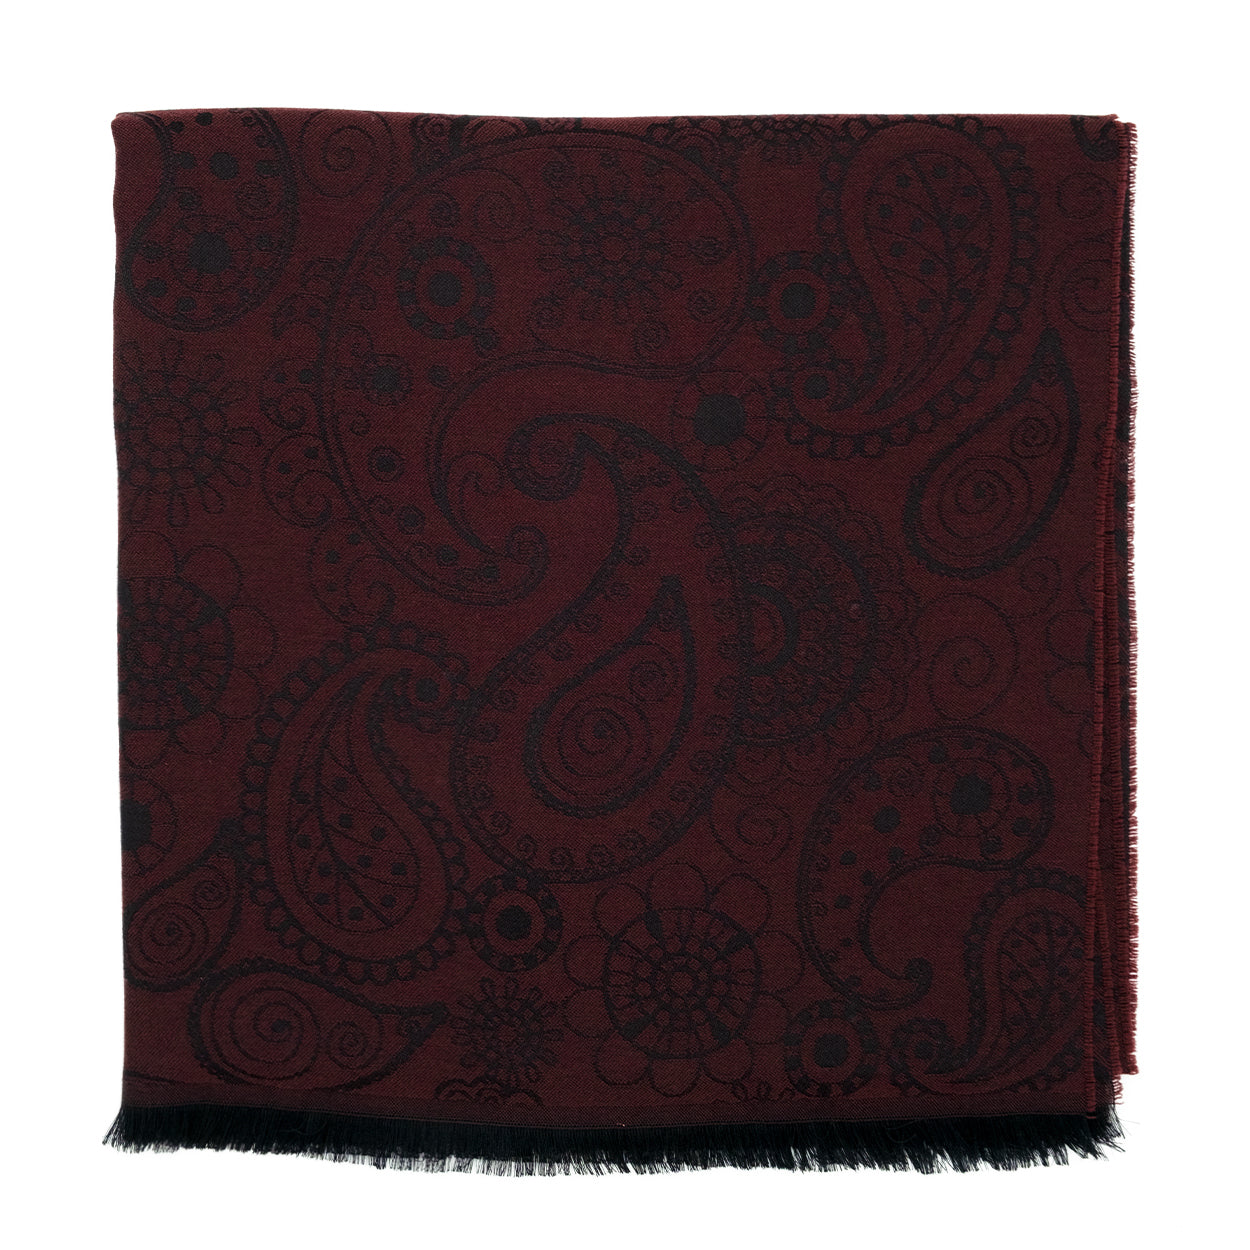 Bordeaux paisley pattern modal & wool jacquard shawl